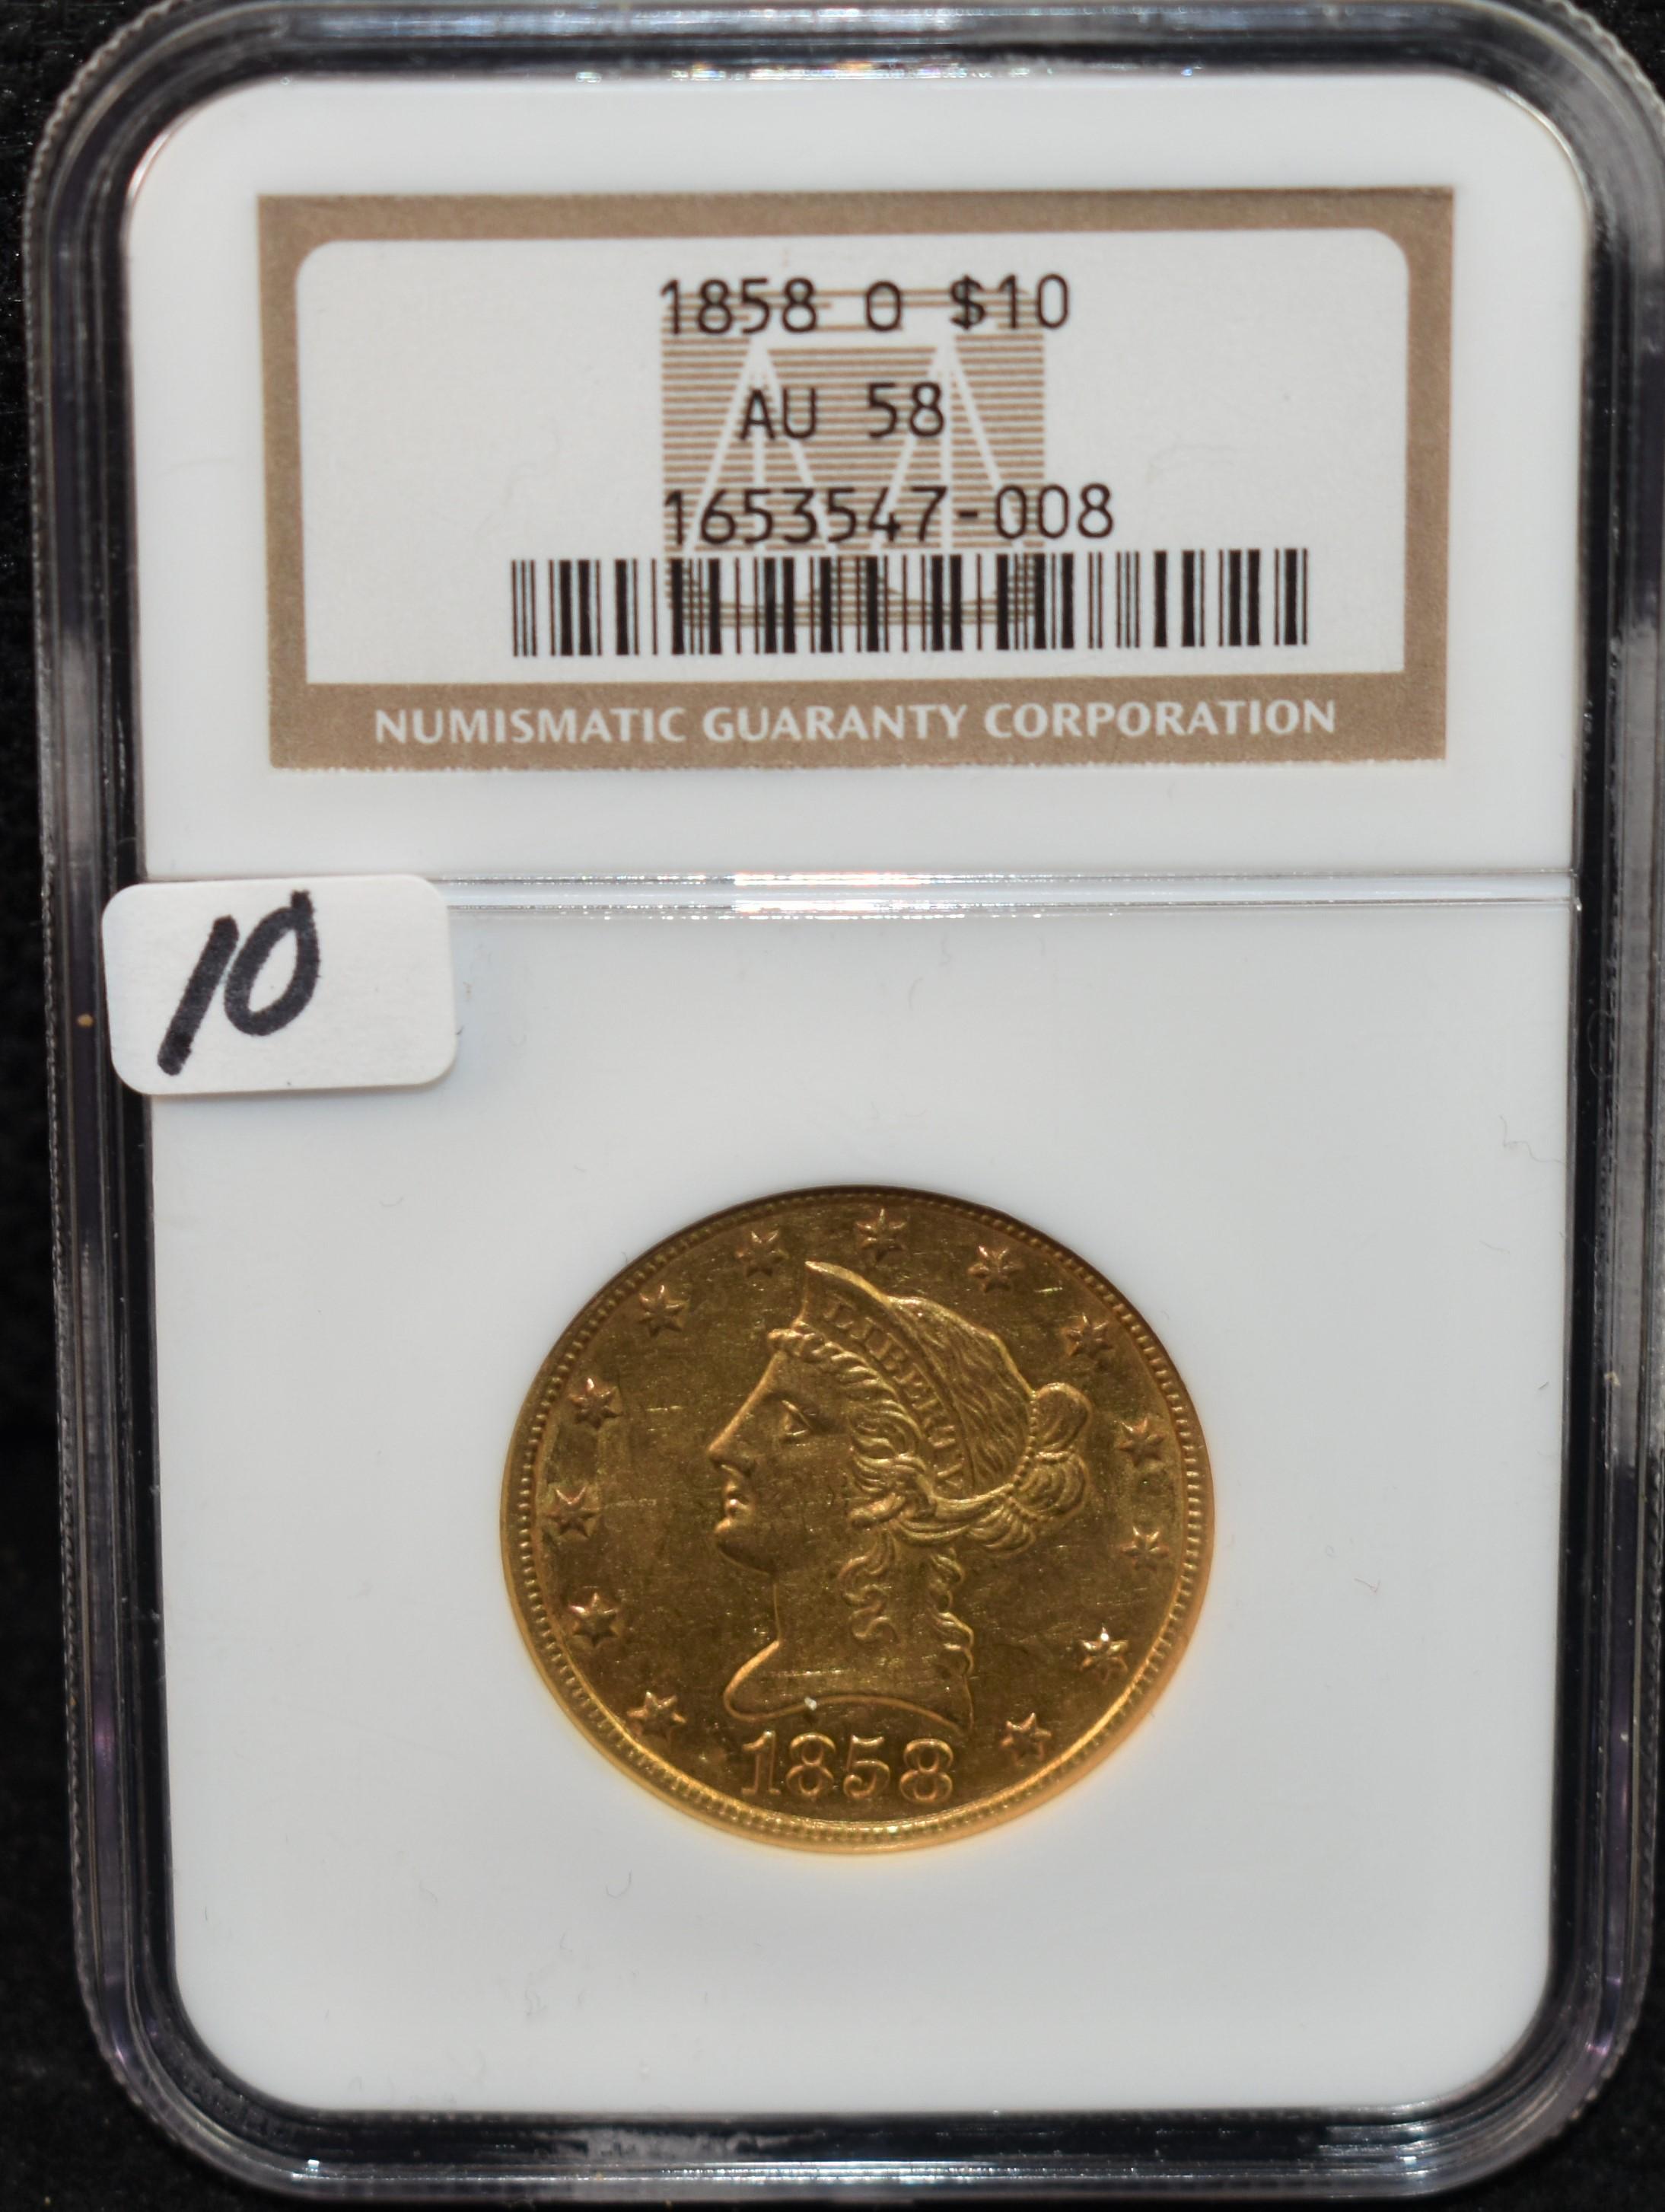 "VERY RARE" 1858-0 $10 LIBERTY GOLD COIN NGC AU58